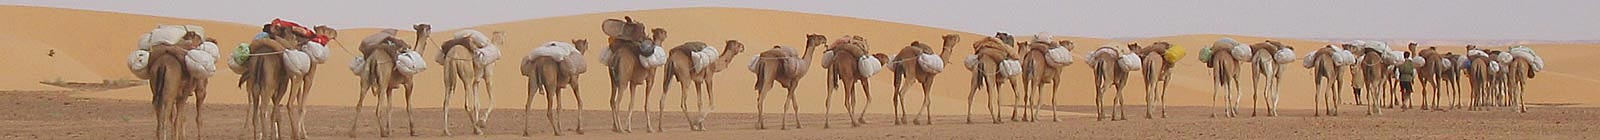 Mauritania Caravan Banner